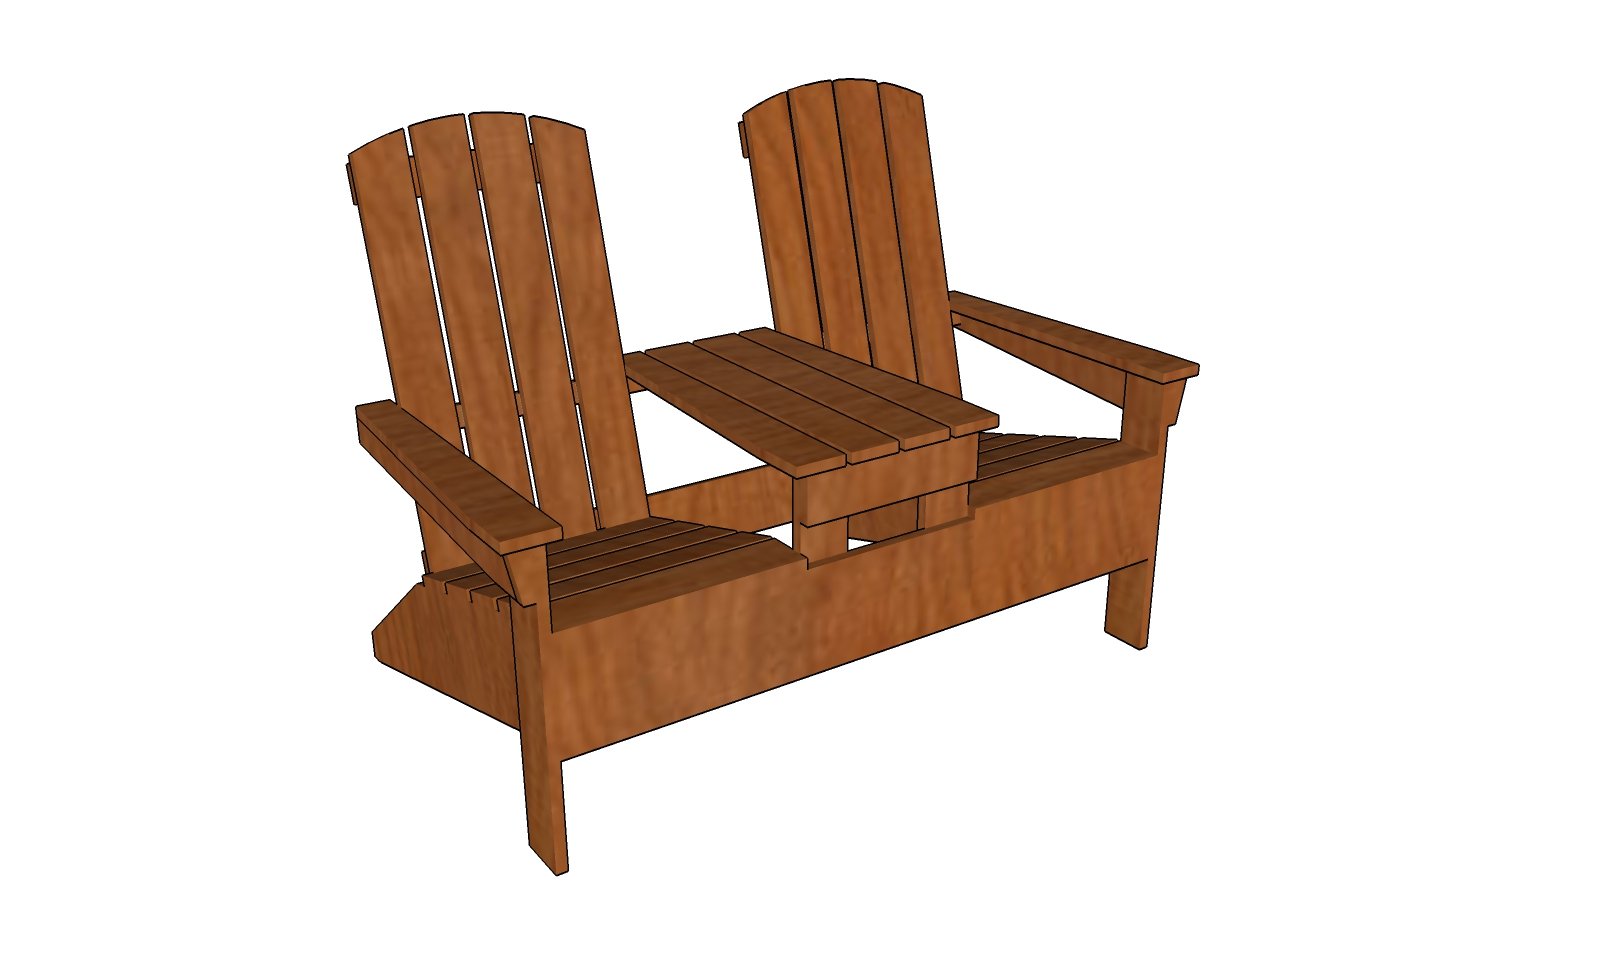 Double Adirondack Chair Plans